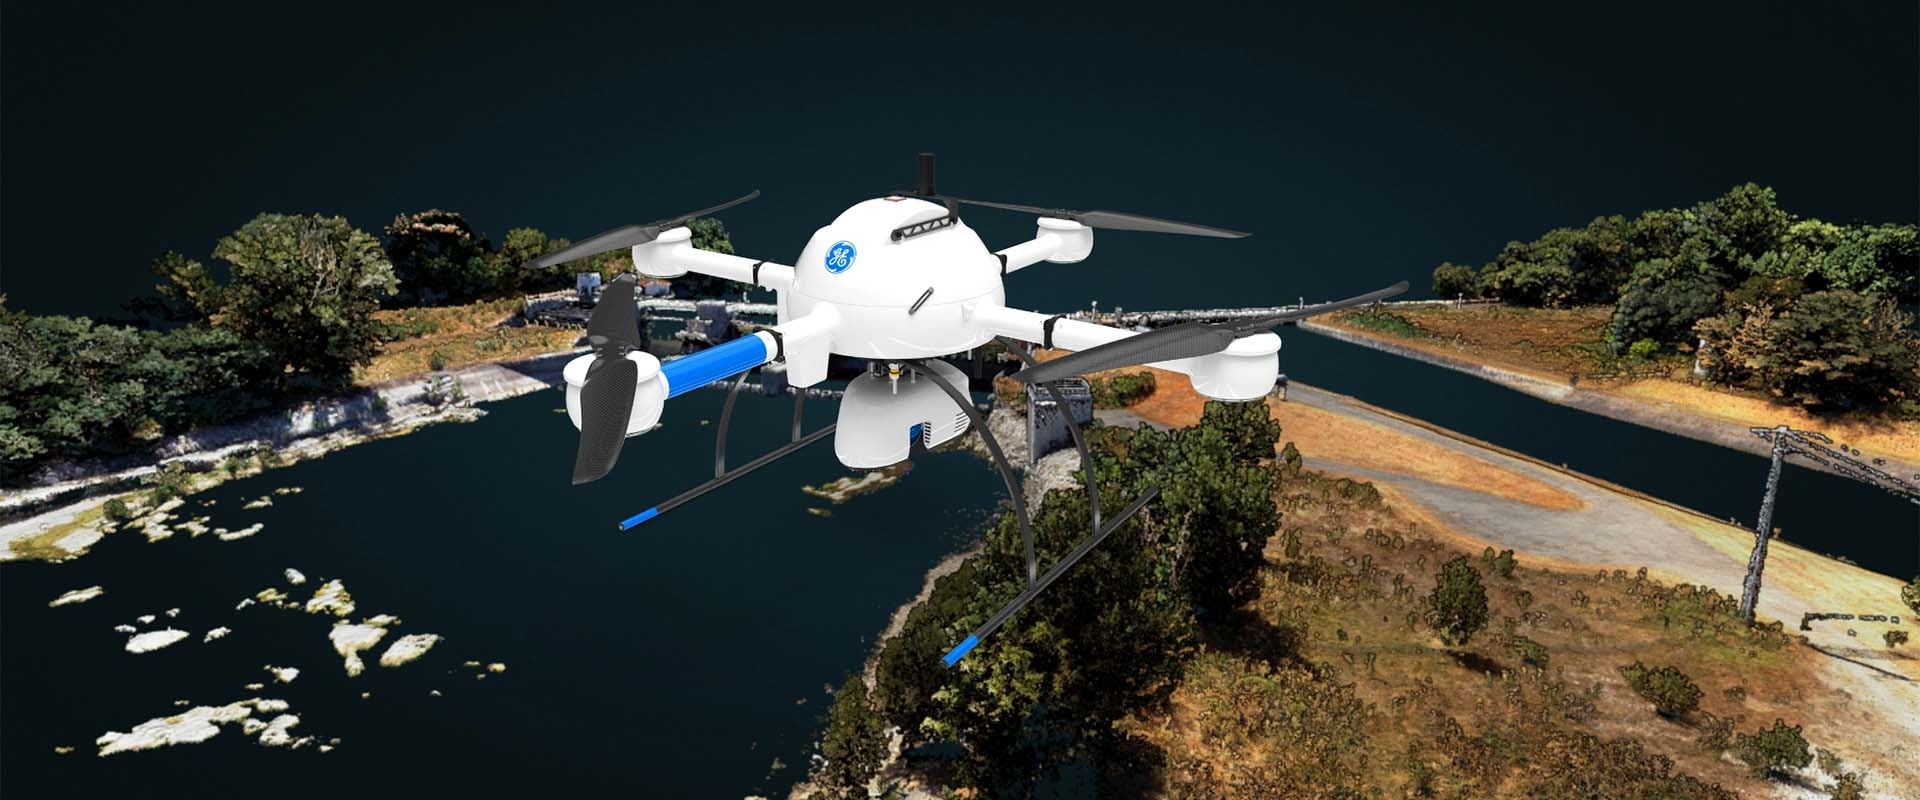 Drone Based LiDAR Survey Equipment - Duncan-Parnell